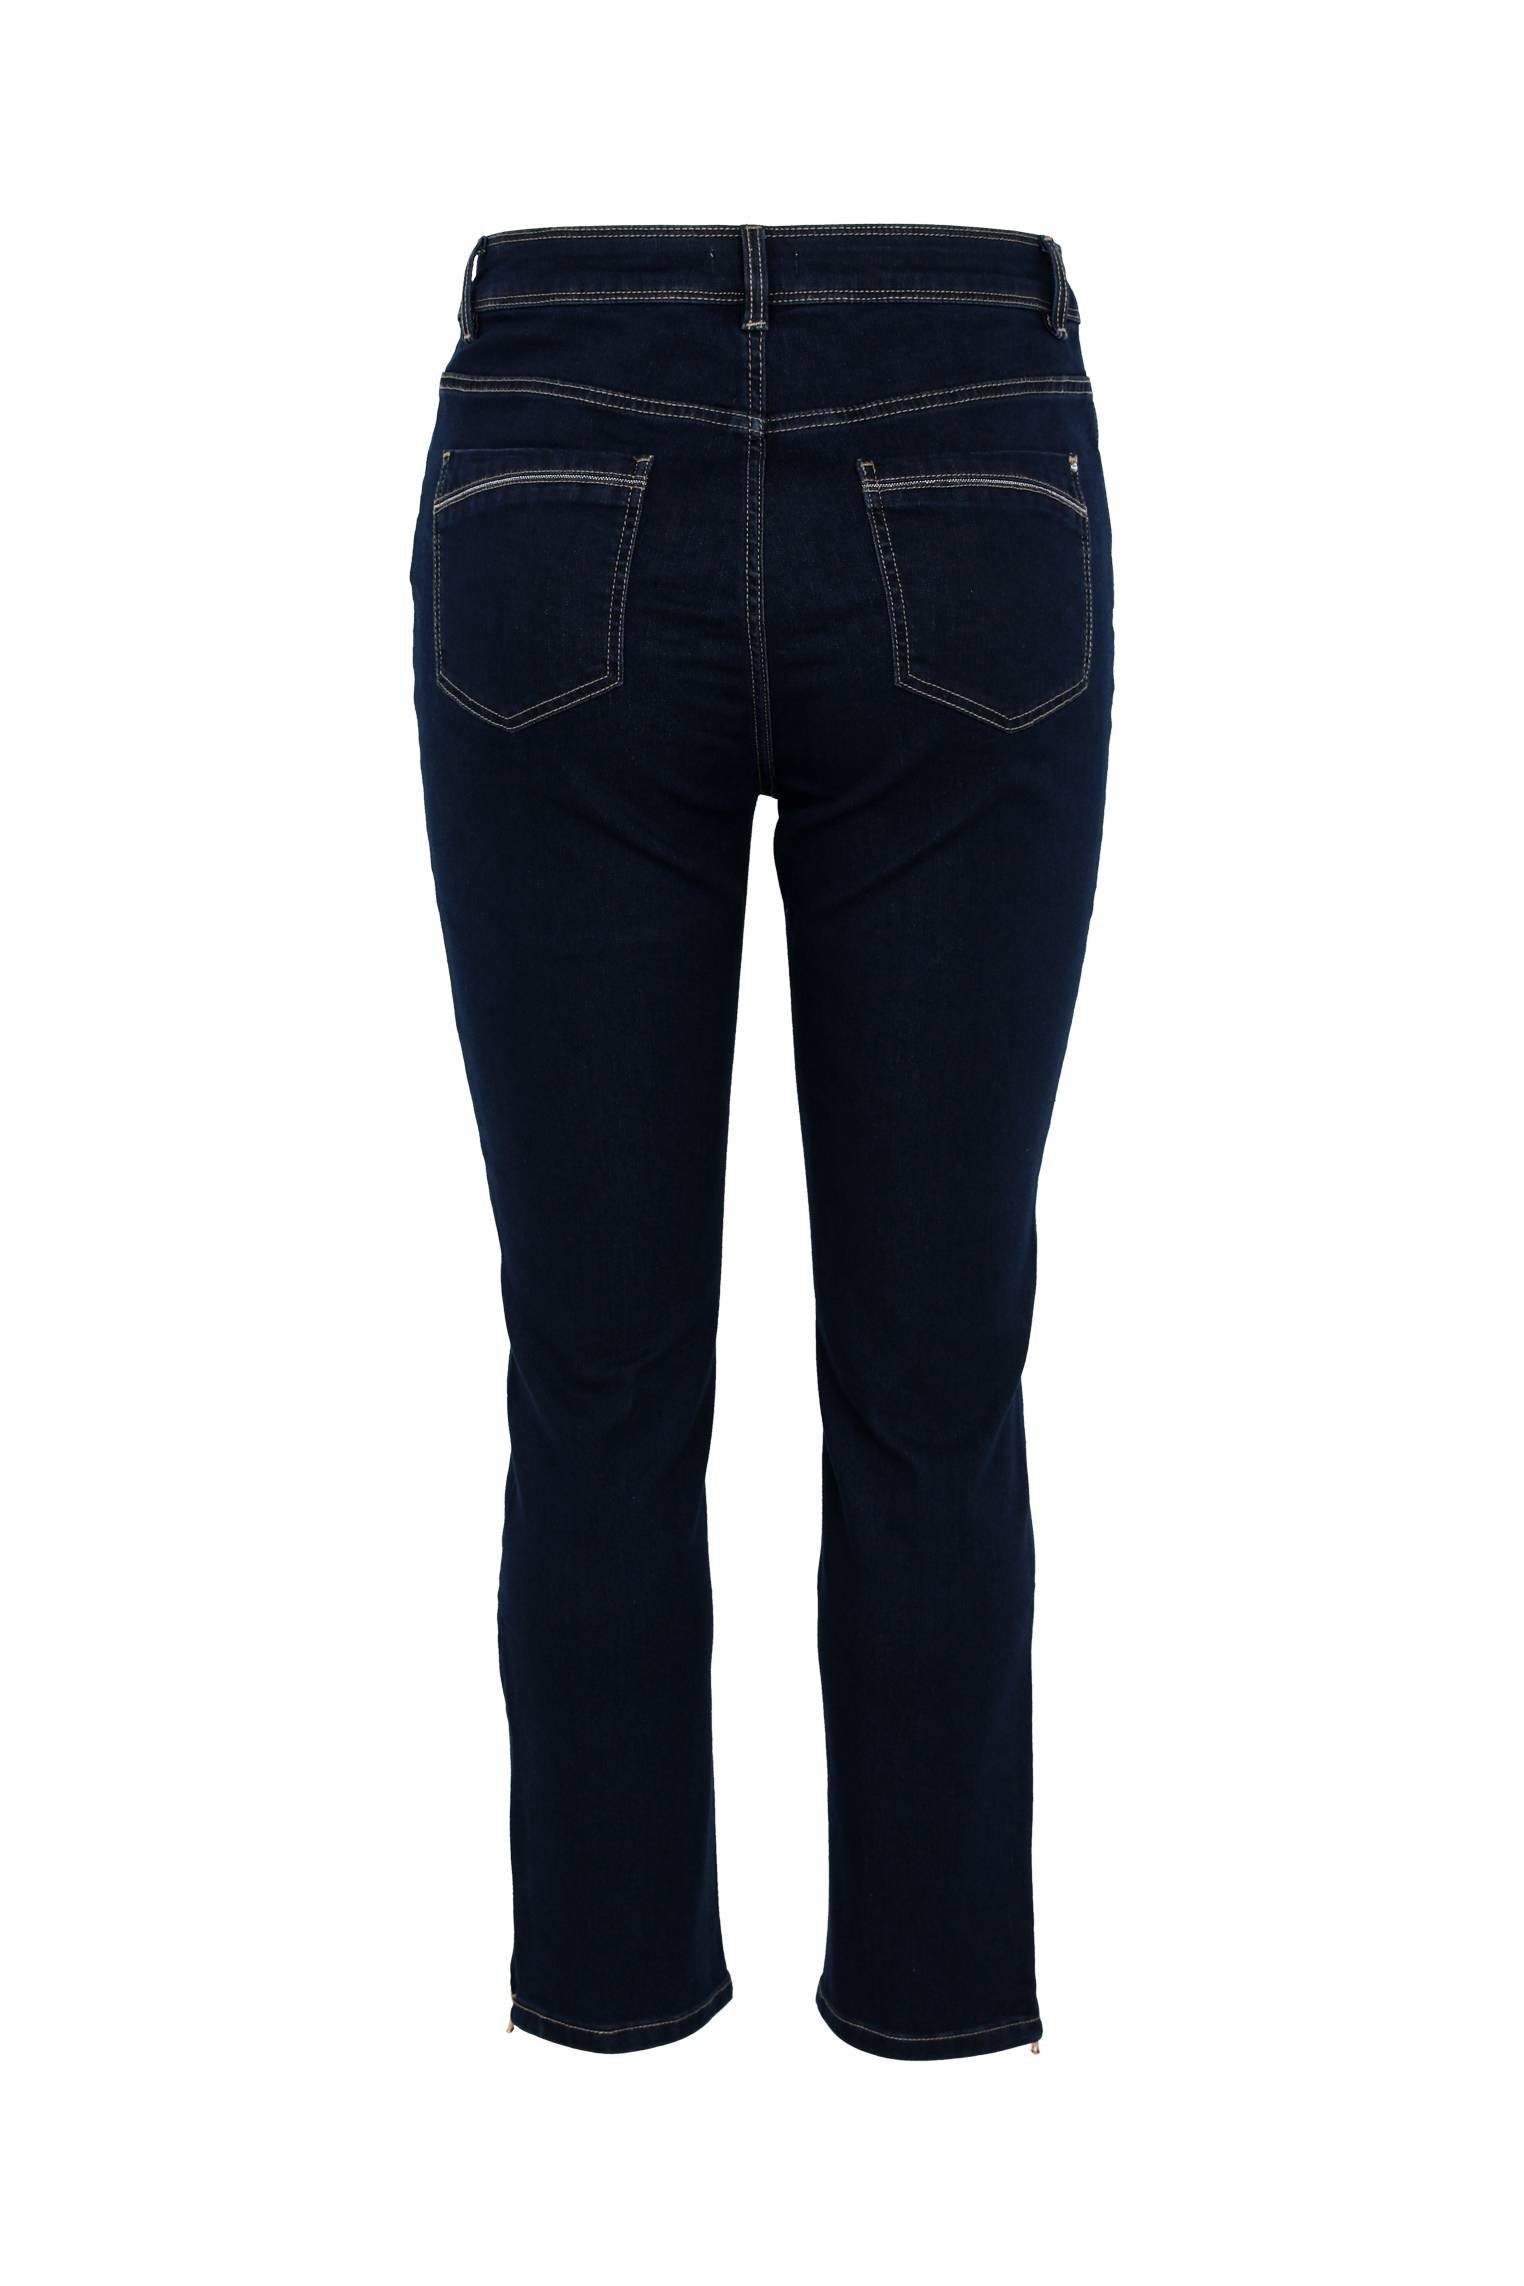 Reißverschluss 5-Pocket-Jeans 7/8-Slim-Fit-Jeans Paprika Unten Mit